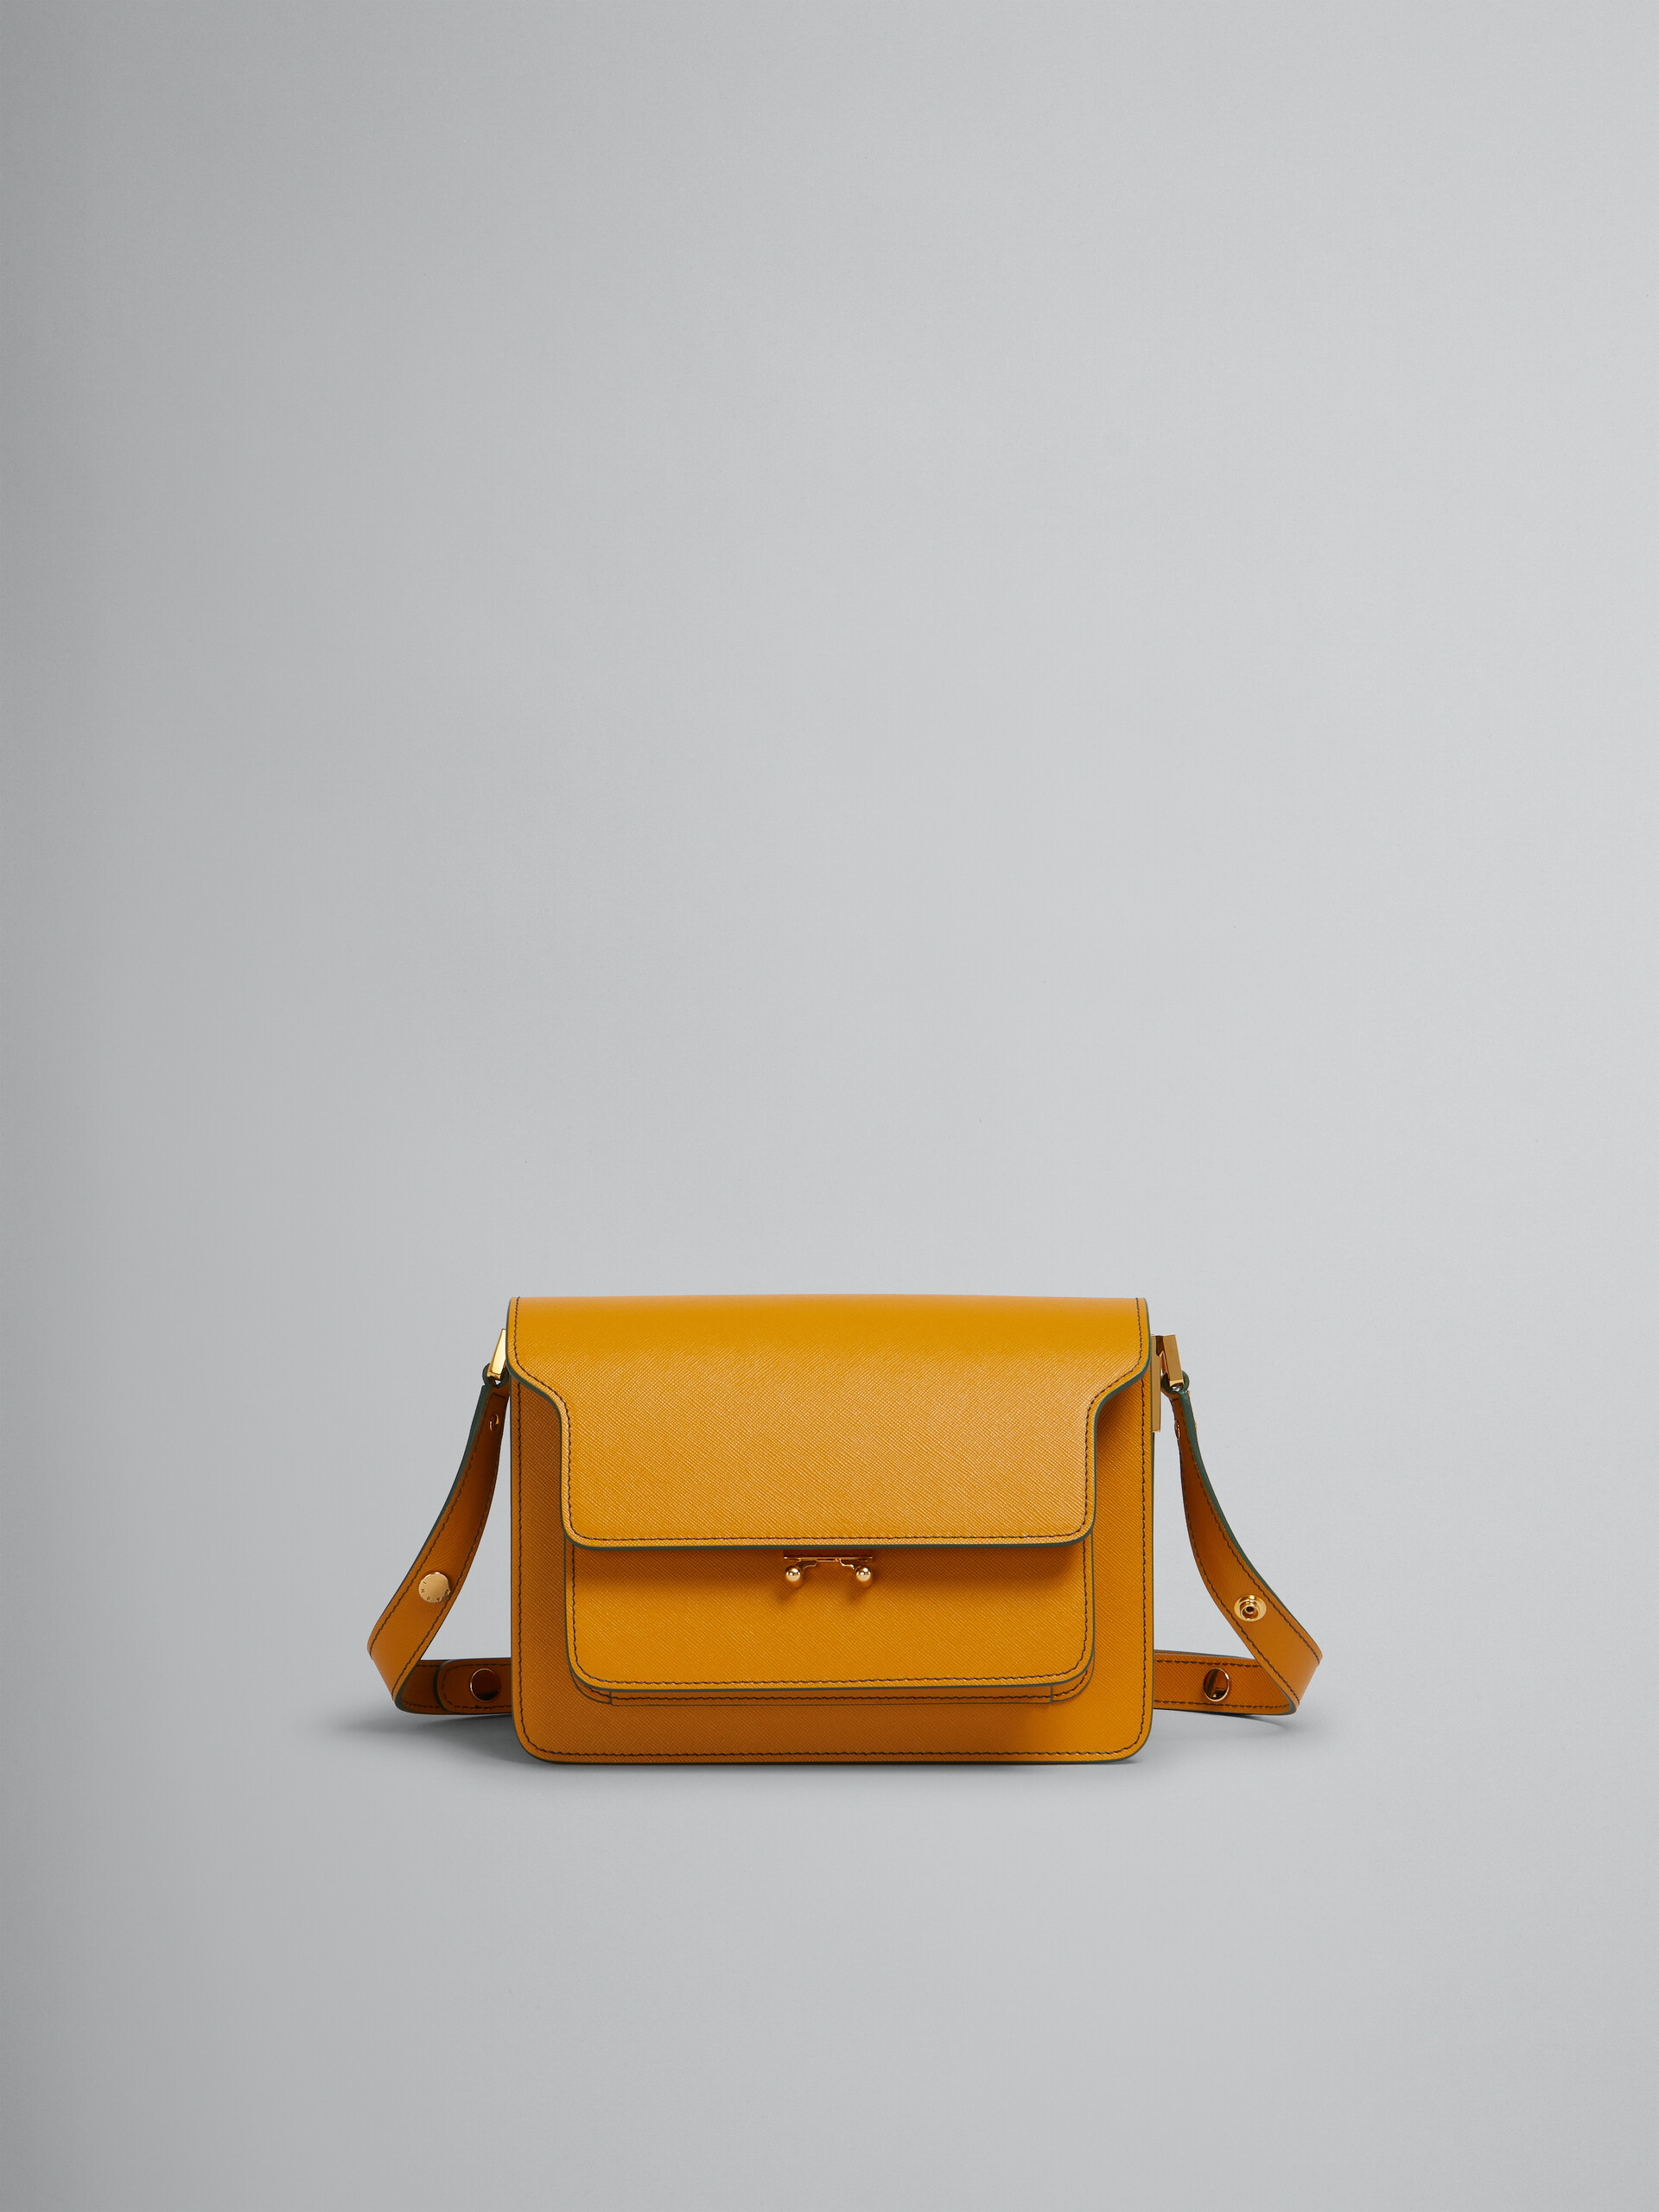 Brown white and orange saffiano leather Trunk bag